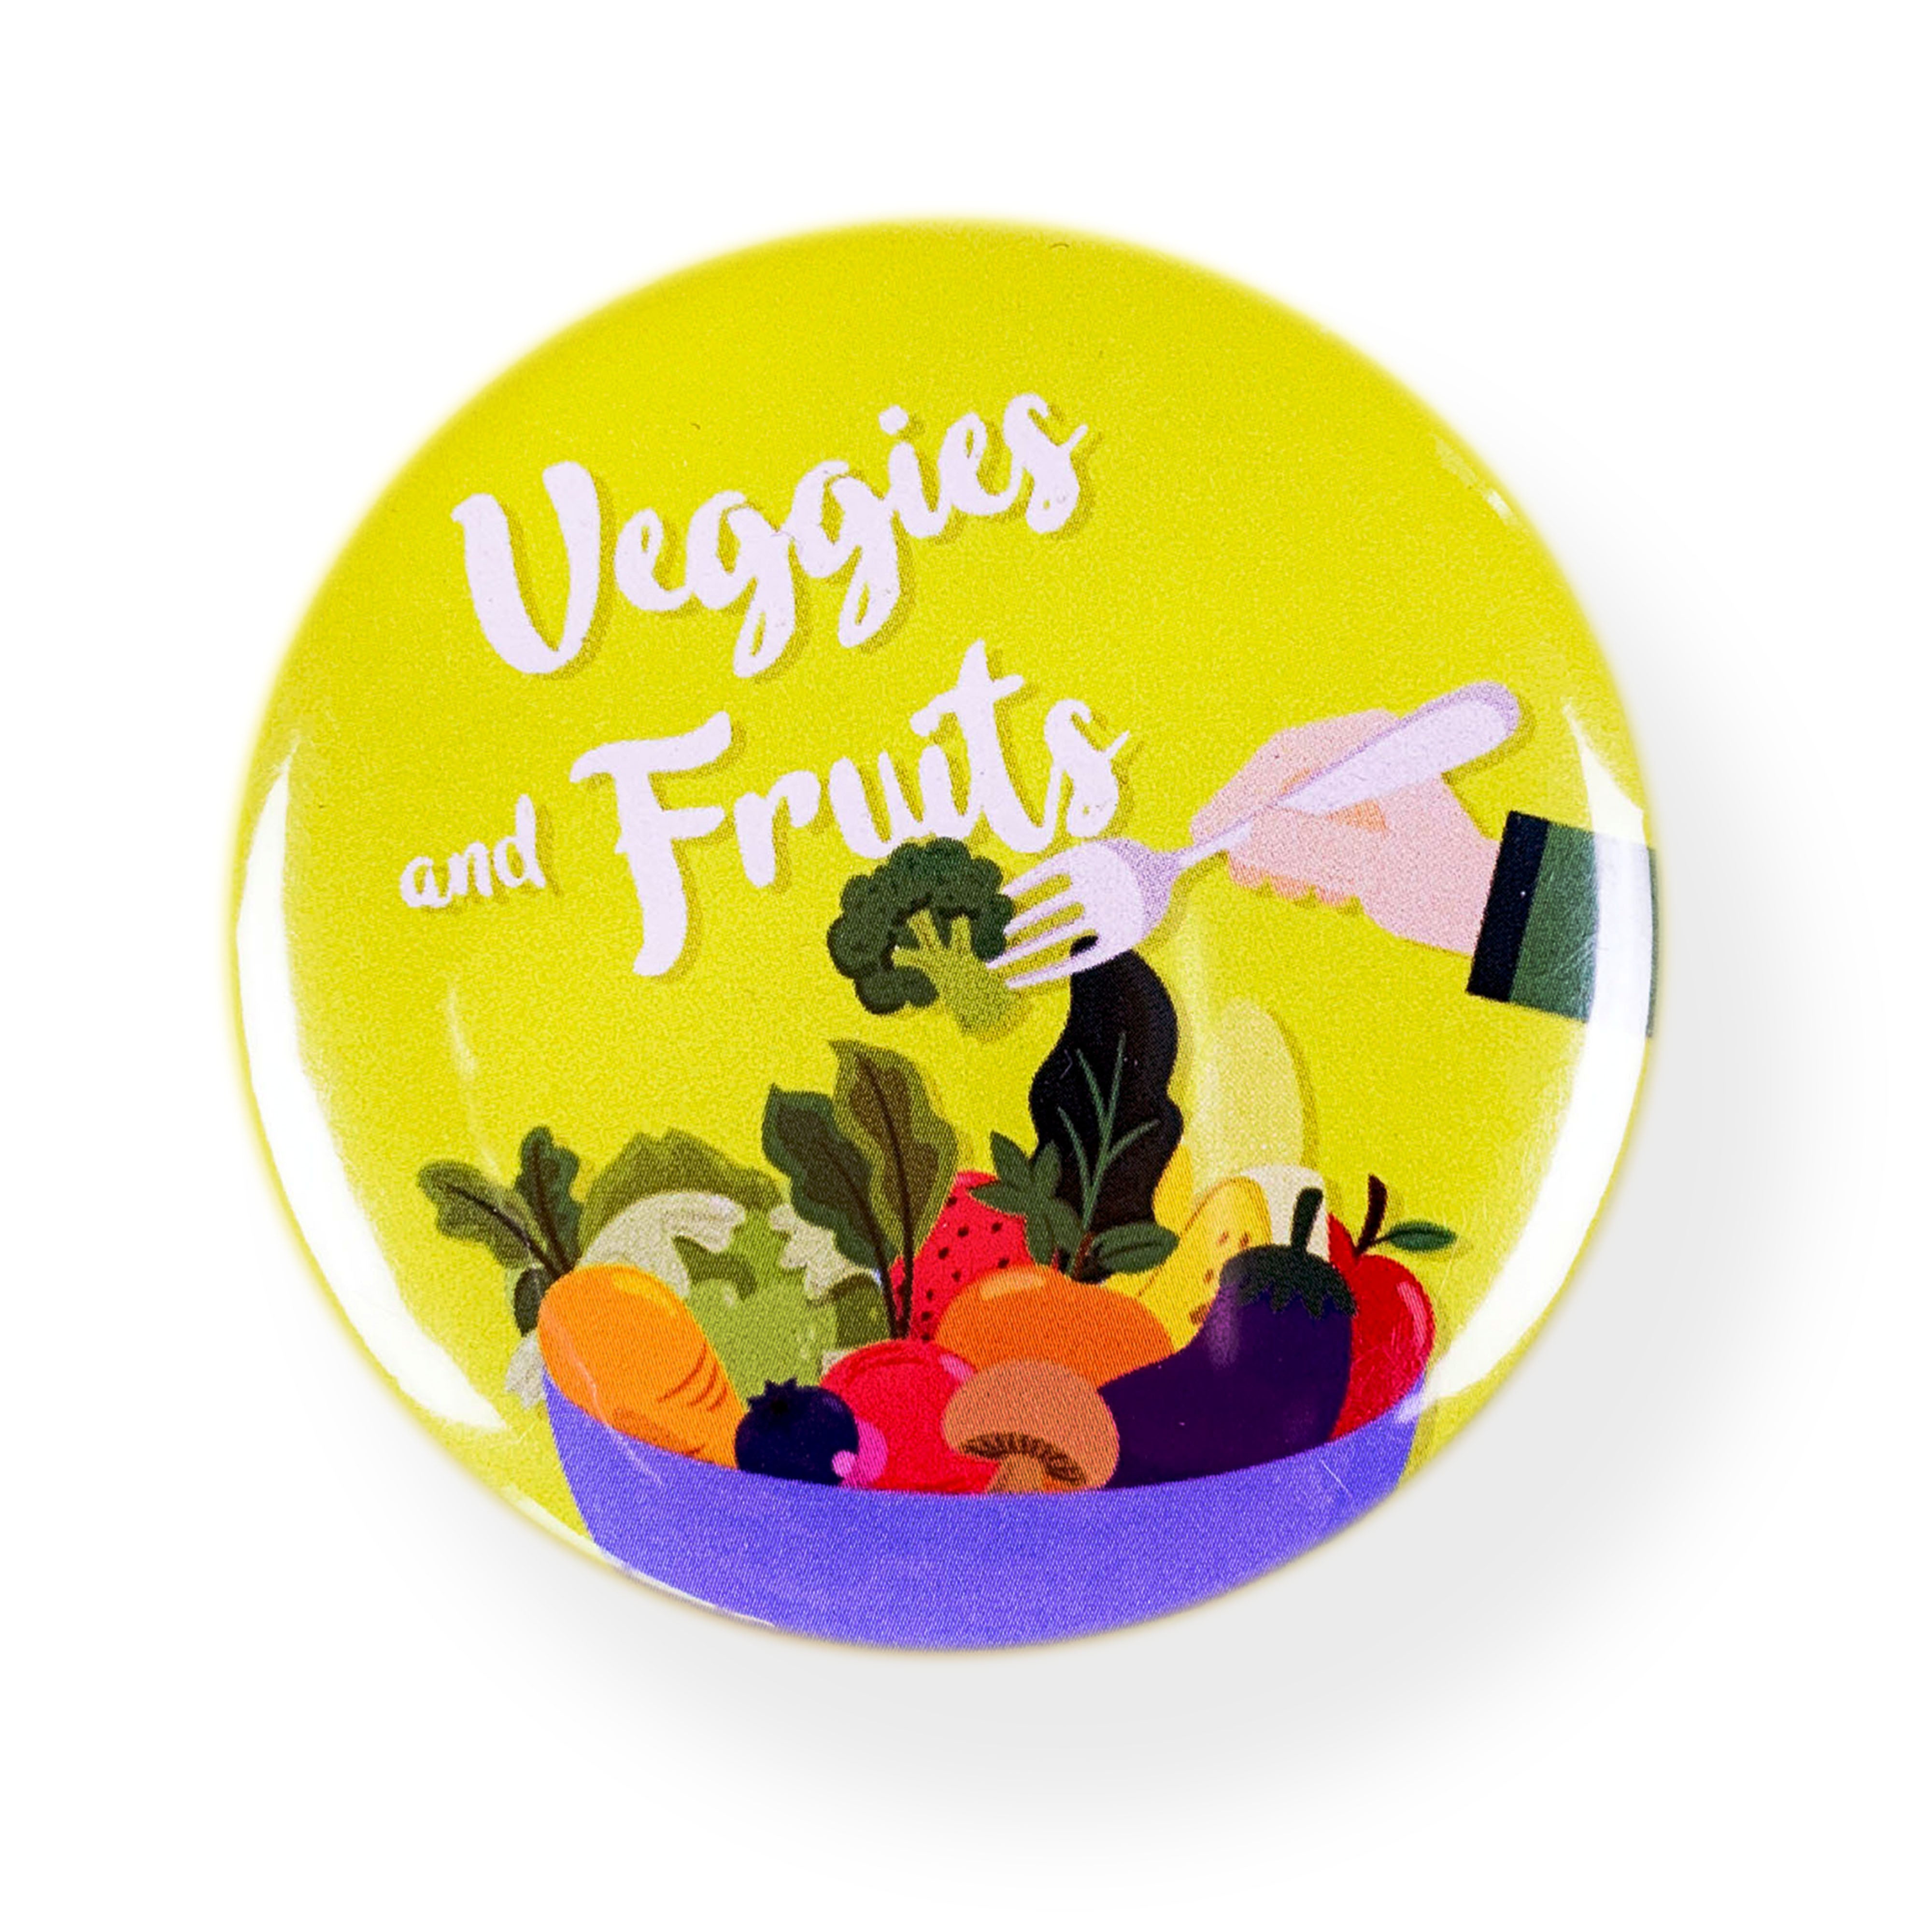 Veggies & Fruits Magnet - مغناطيس خضروات وفواكه